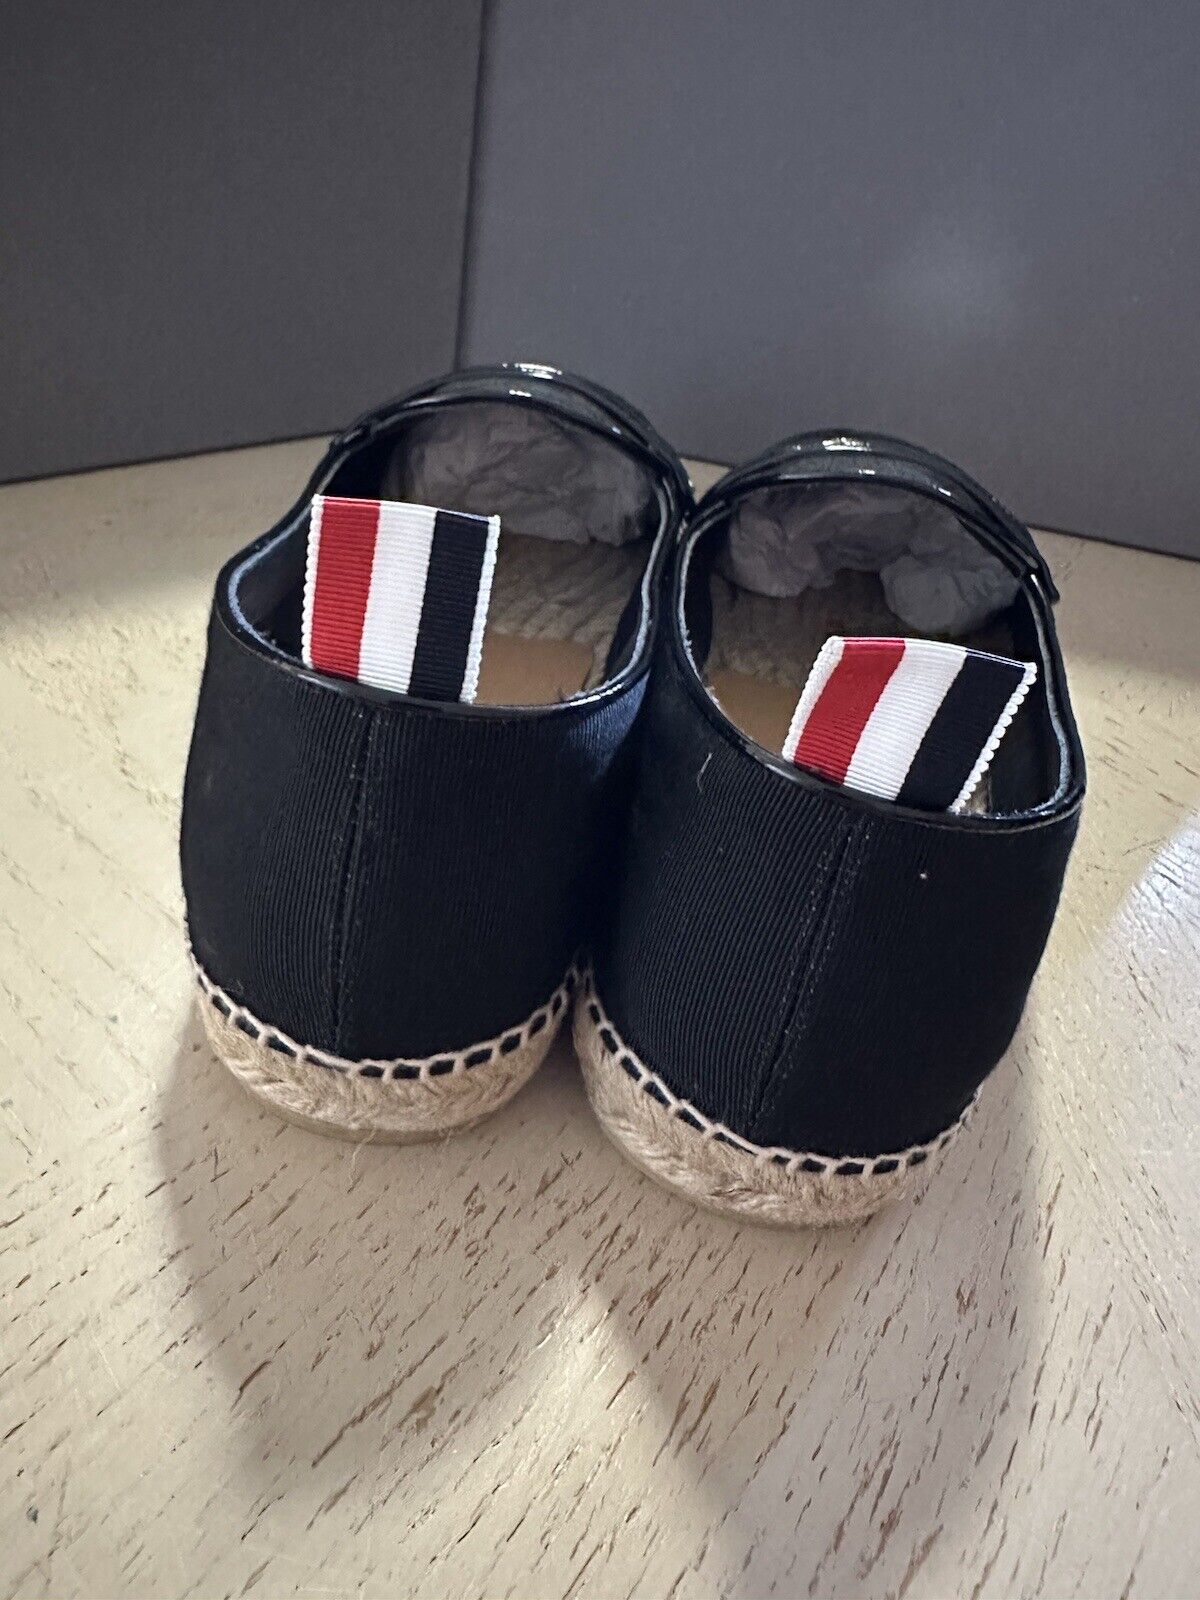 NIB Thom Browne Men Penny Espadrille Loafers Shoes Black 9 US/42 EU Spain